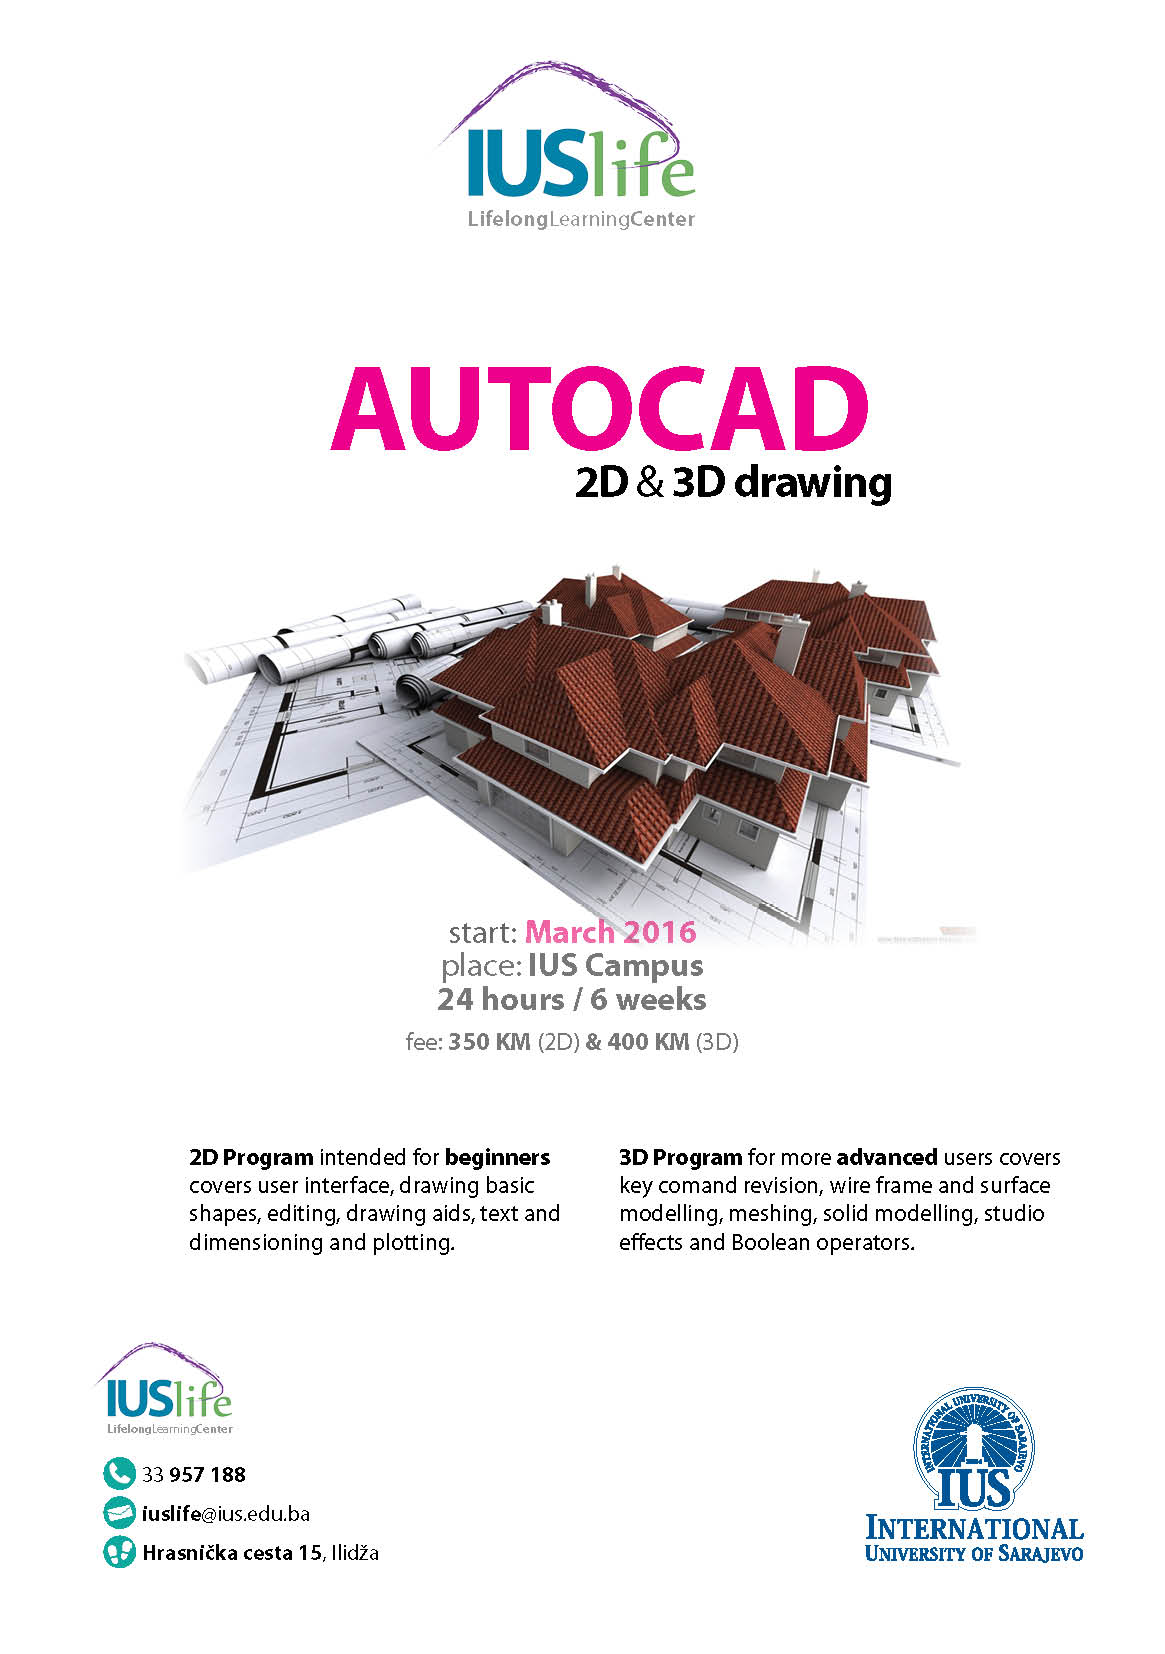 2D CAD EXERCISES 361 - STUDYCADCAM | Autocad drawing, Autocad, Autocad  isometric drawing